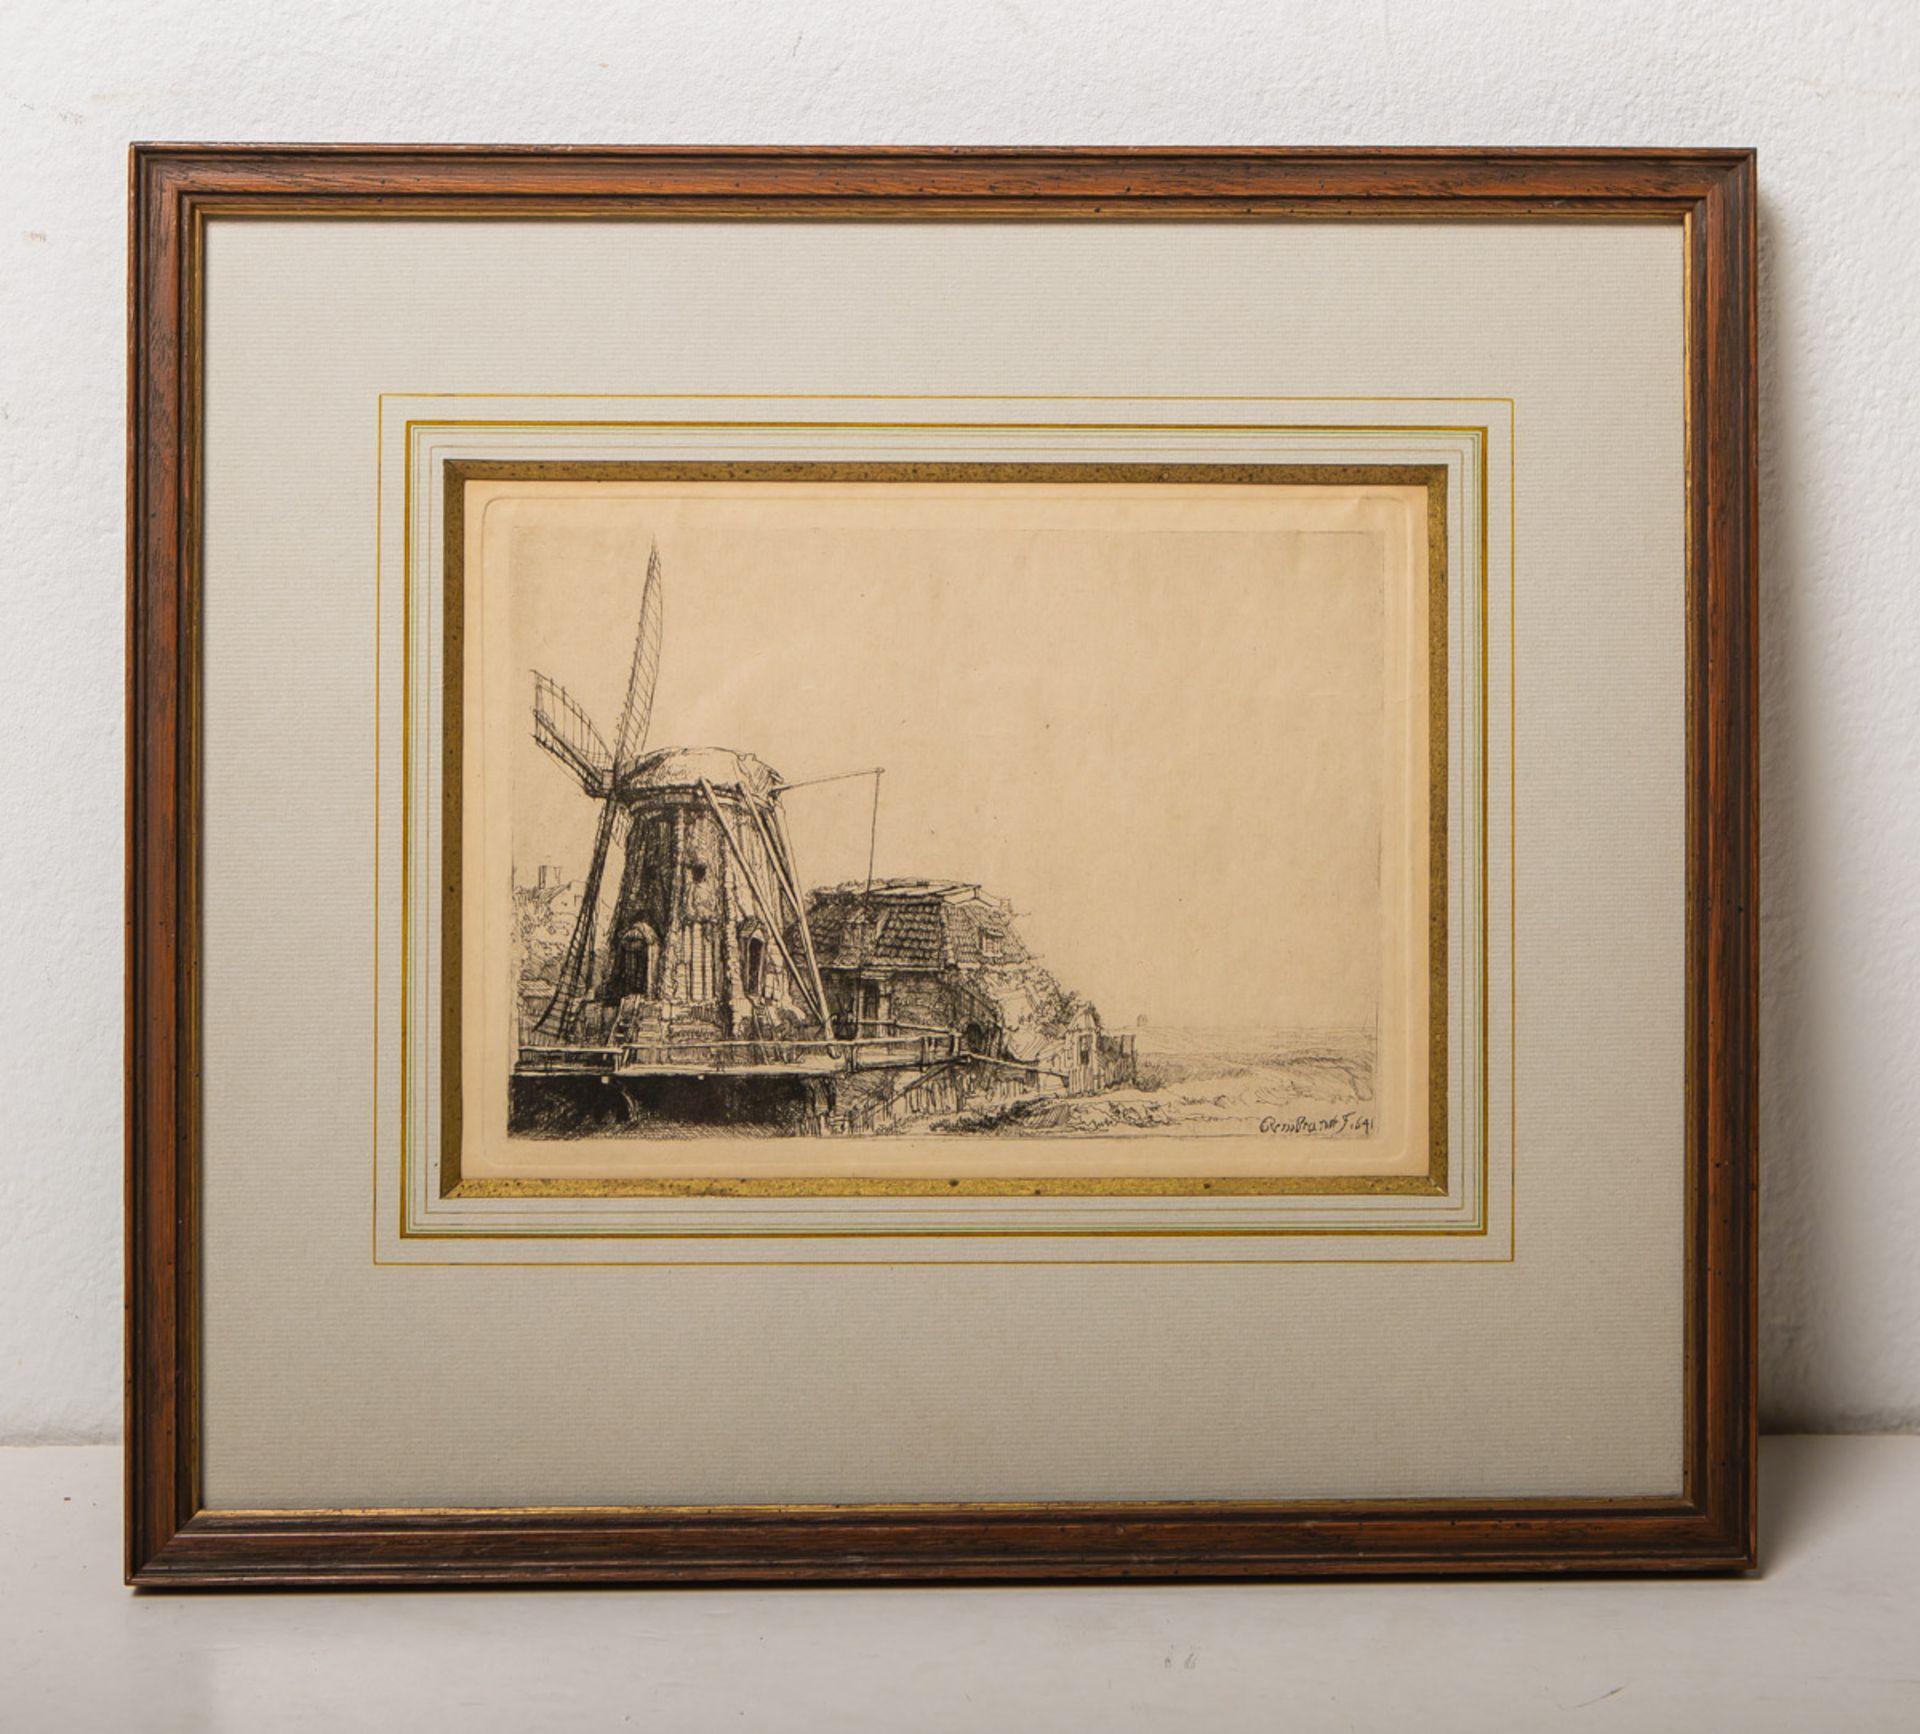 Rembrandt van, Rijn (1606 - 1669), Die Windmühle (1641)